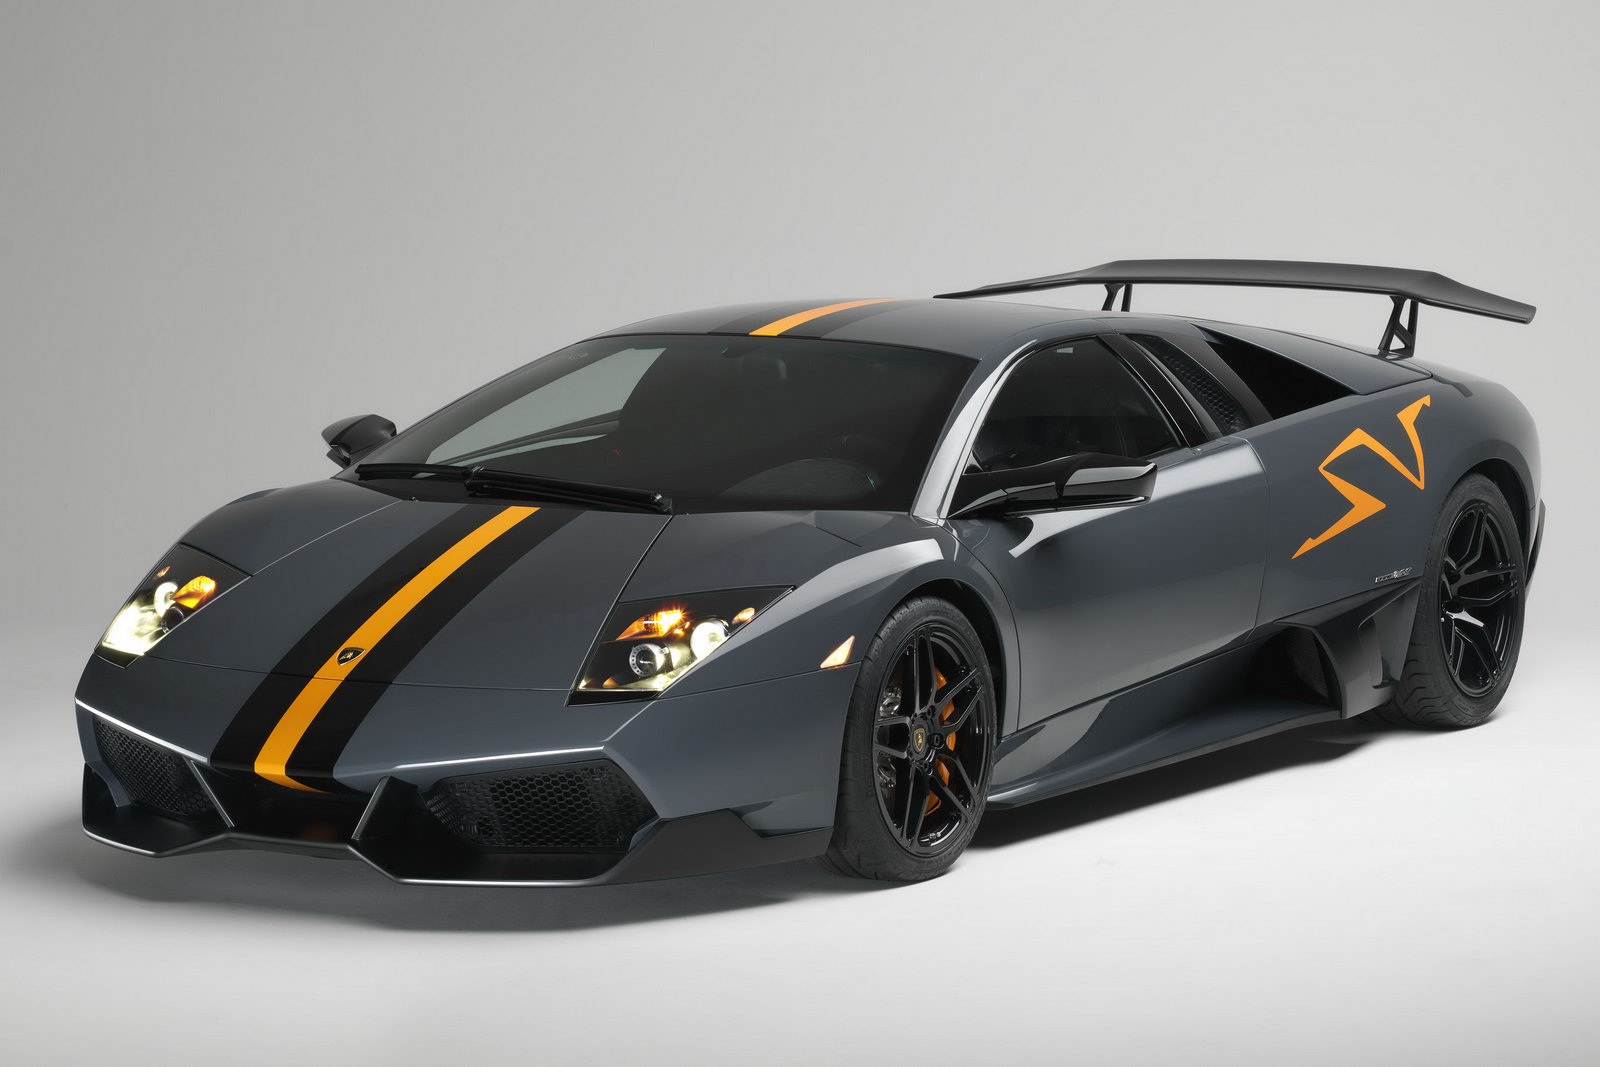 Car News: Lamborghini murcielago lp 670-4 superveloce